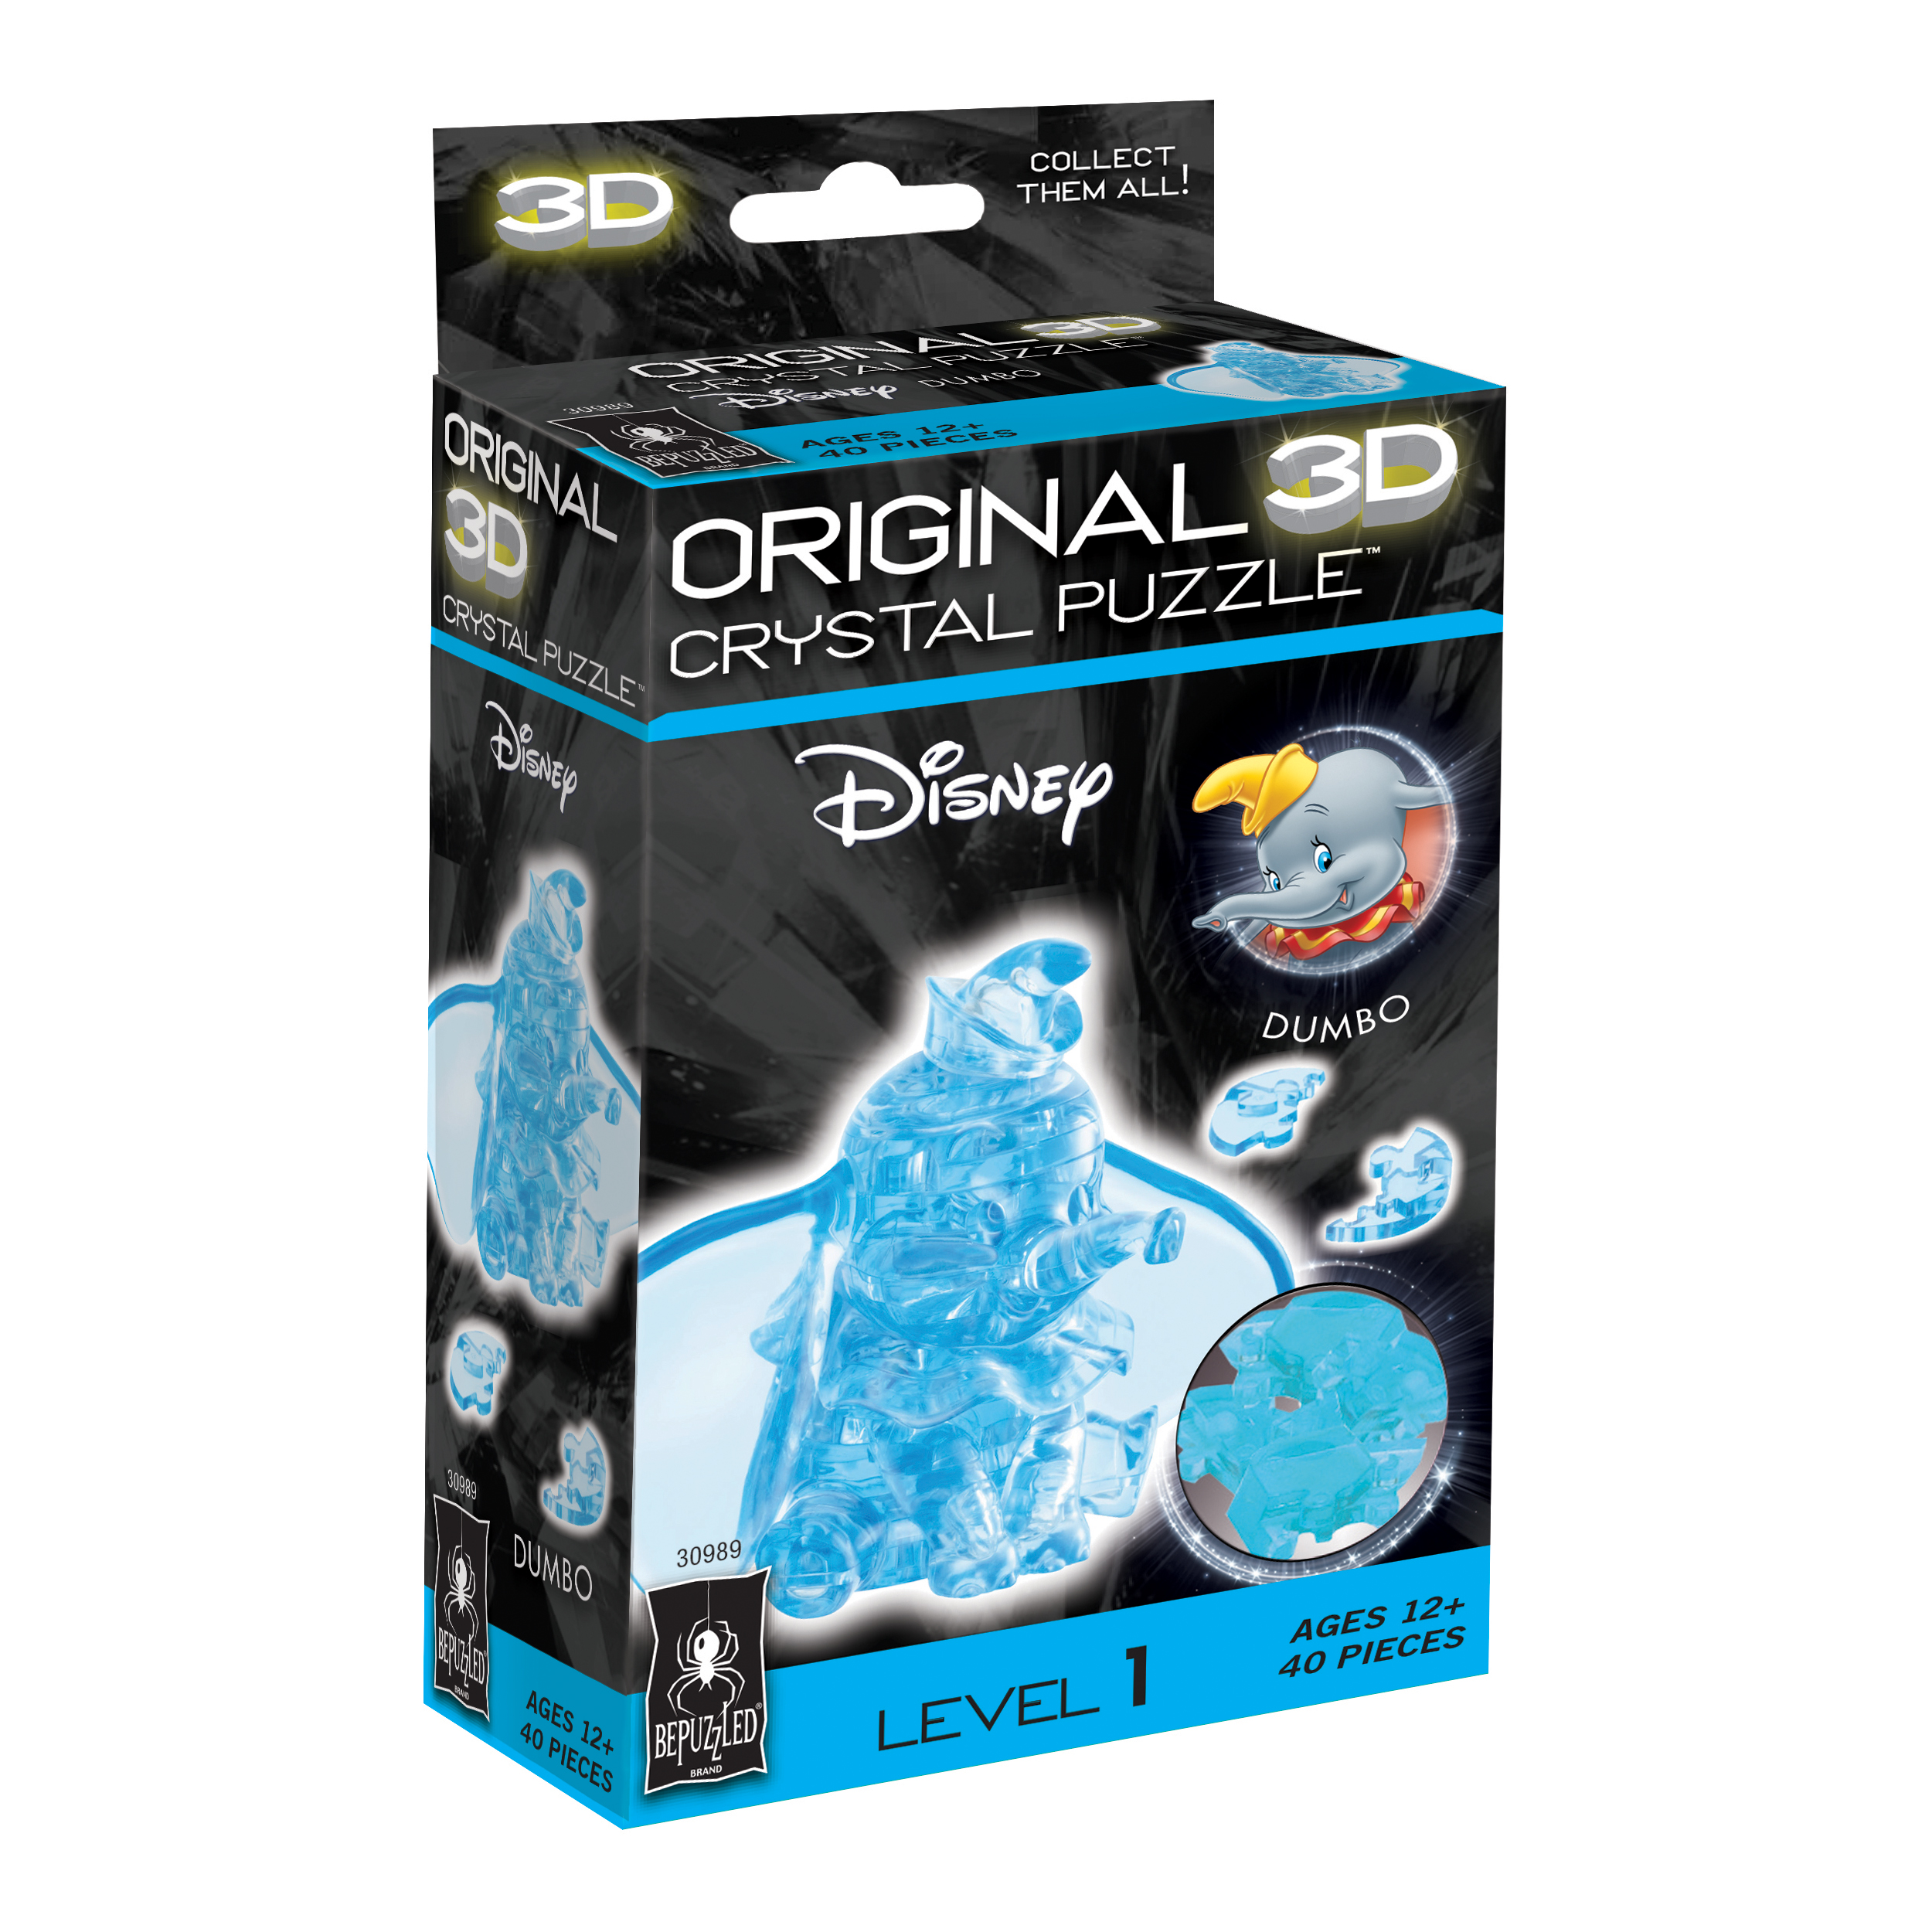 Bepuzzled 3D Crystal Puzzle Disney Dumbo 40 Pcs Toys